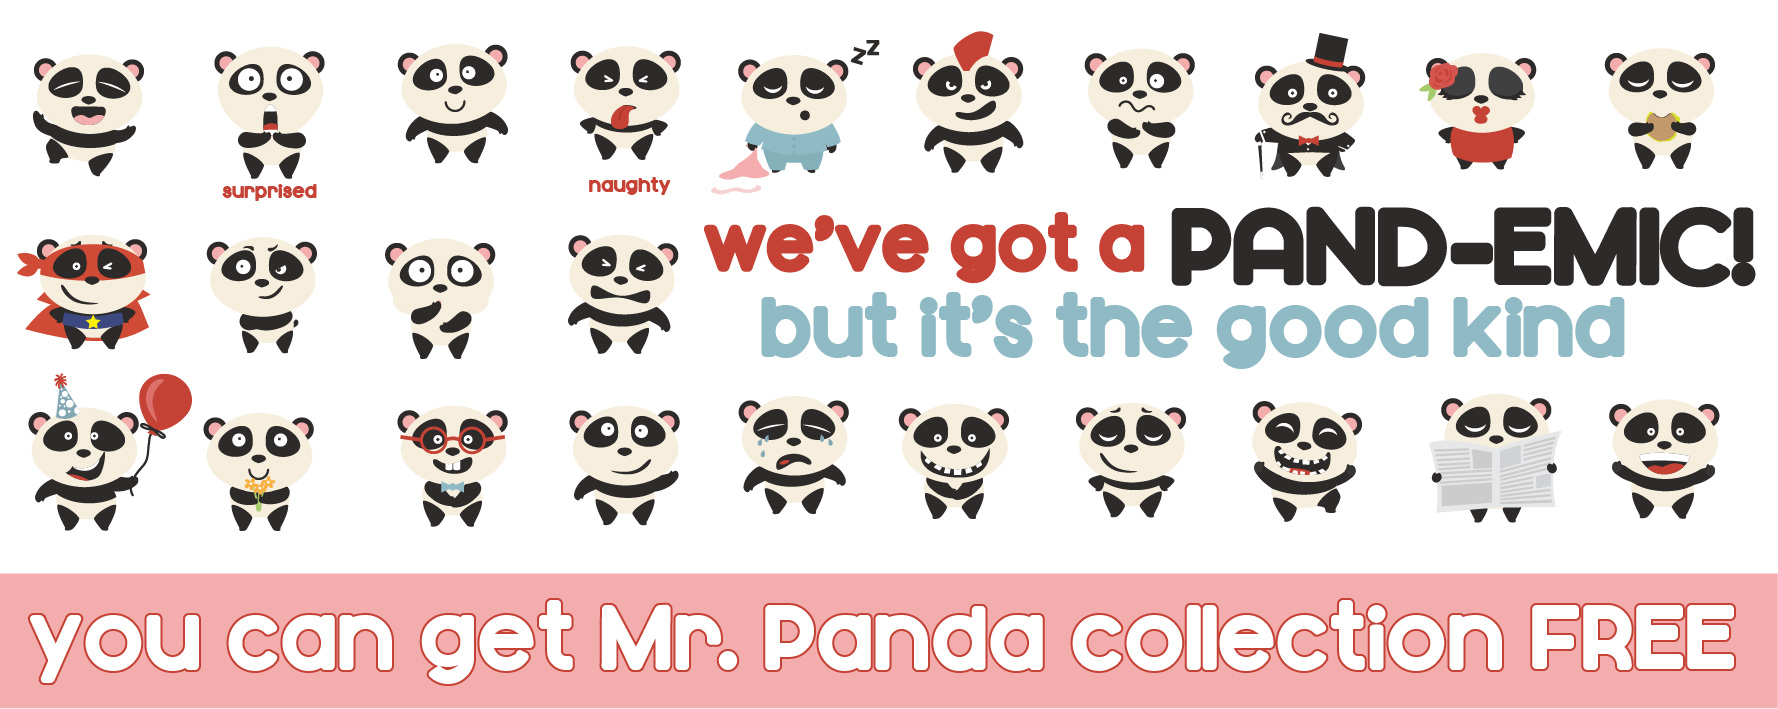 Earn the Mr. Panda - Promotional Bundle - Free